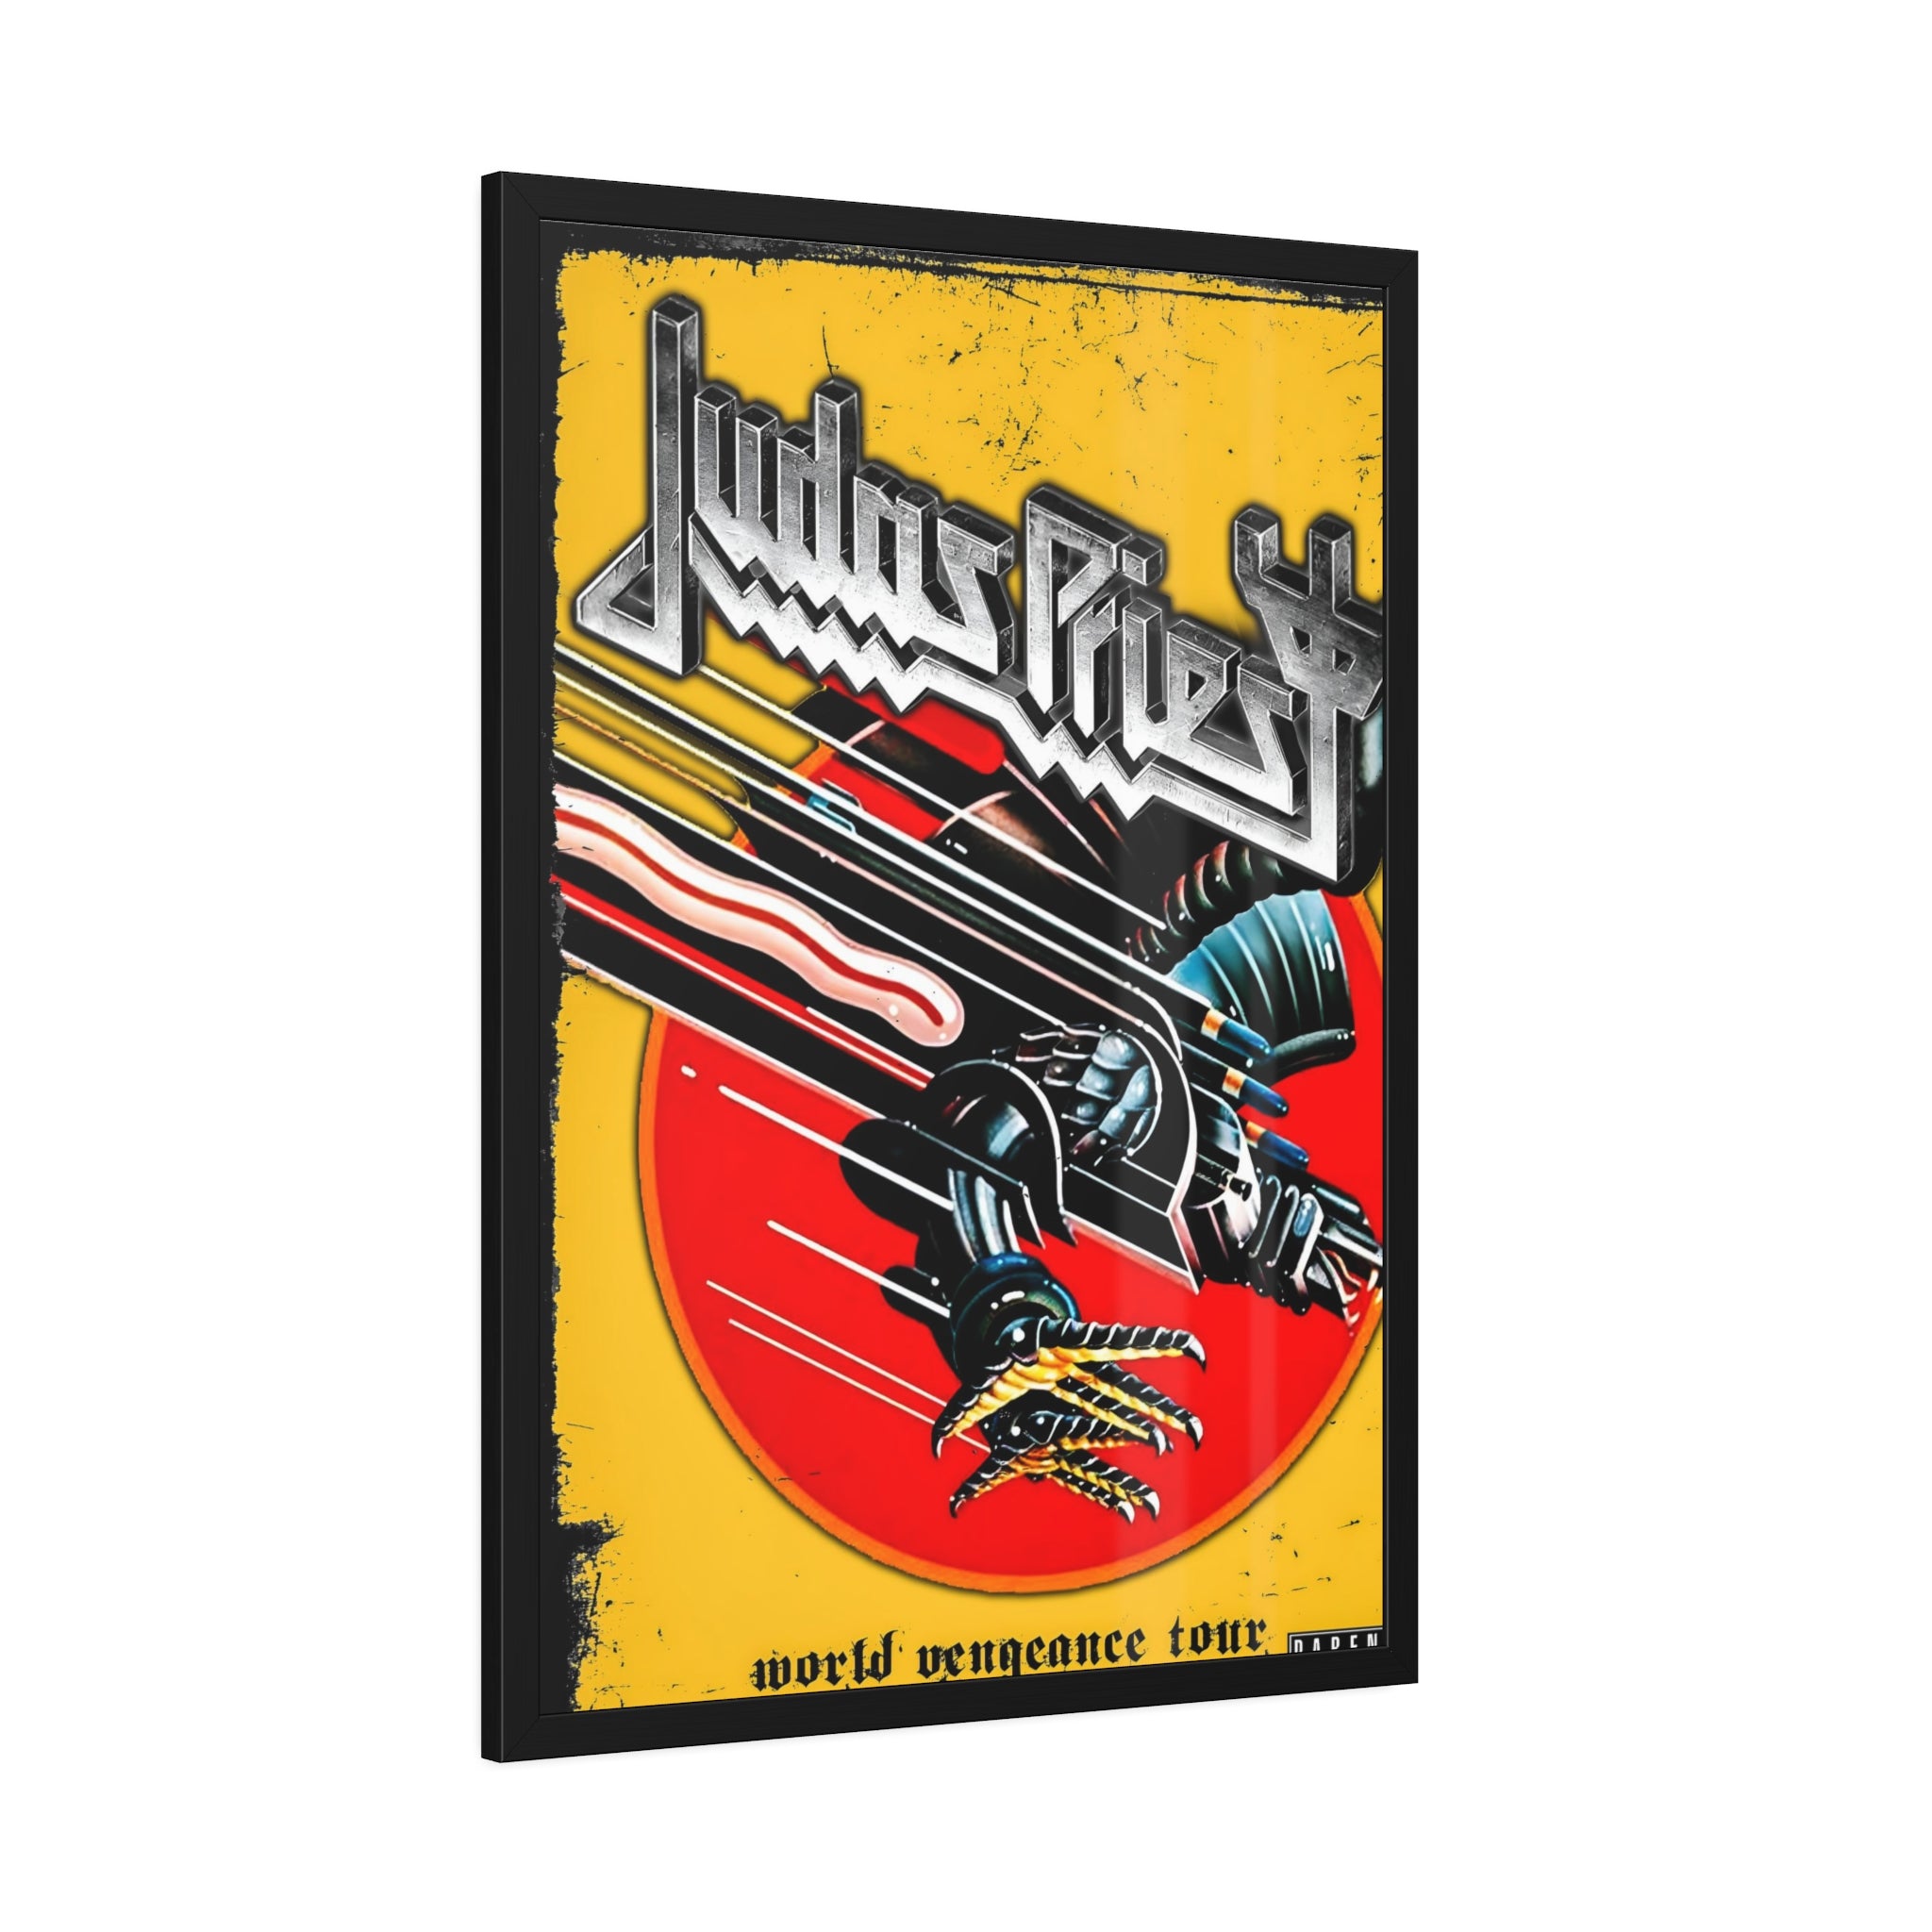 Judas Priest Concert Poster VI